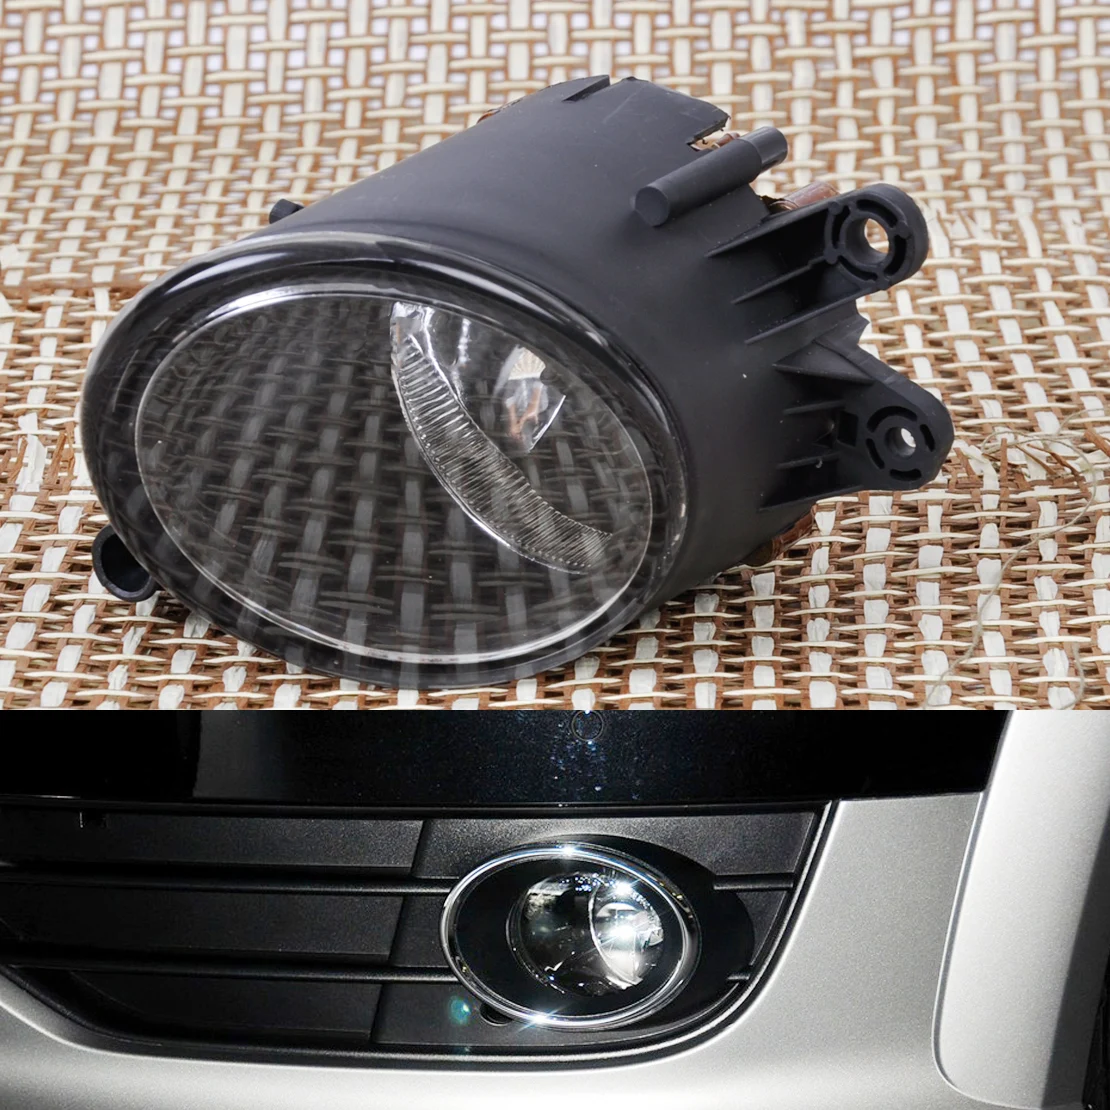 DWCX черный Передний левый туман светильник лампа для Audi A4 B6 A4 B7 A4 Quattro 2001 2002 2003 2004 2005 2006 2007 2008 8E0941699B